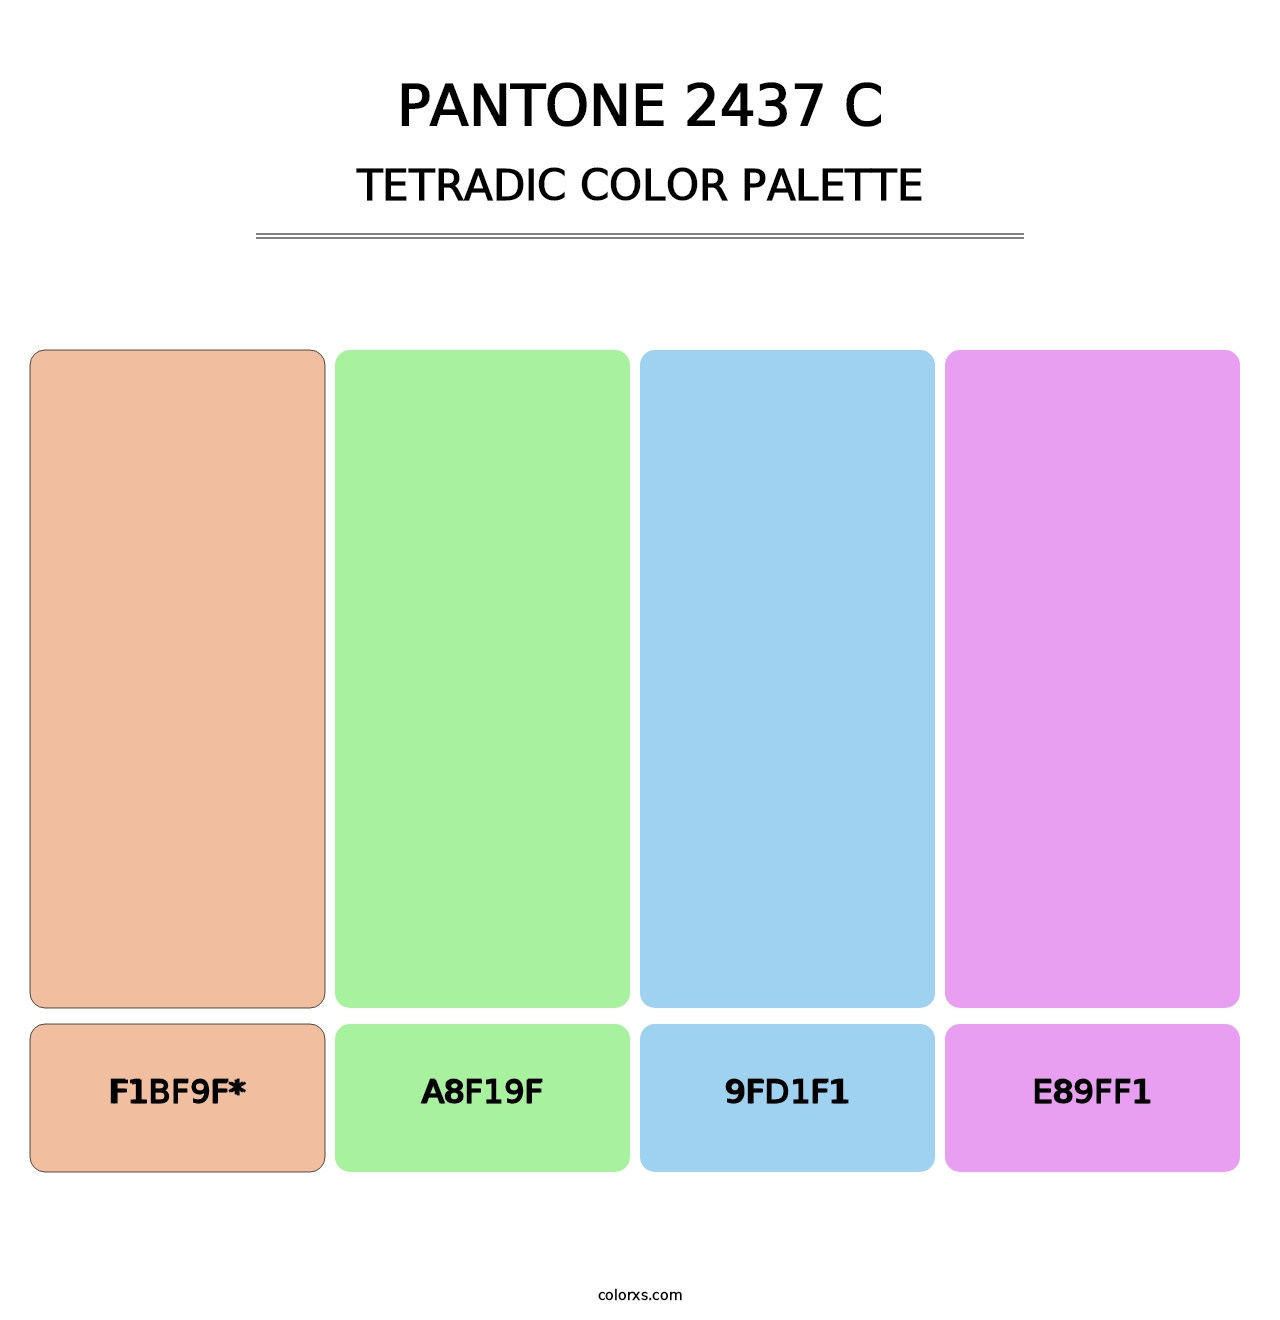 PANTONE 2437 C - Tetradic Color Palette